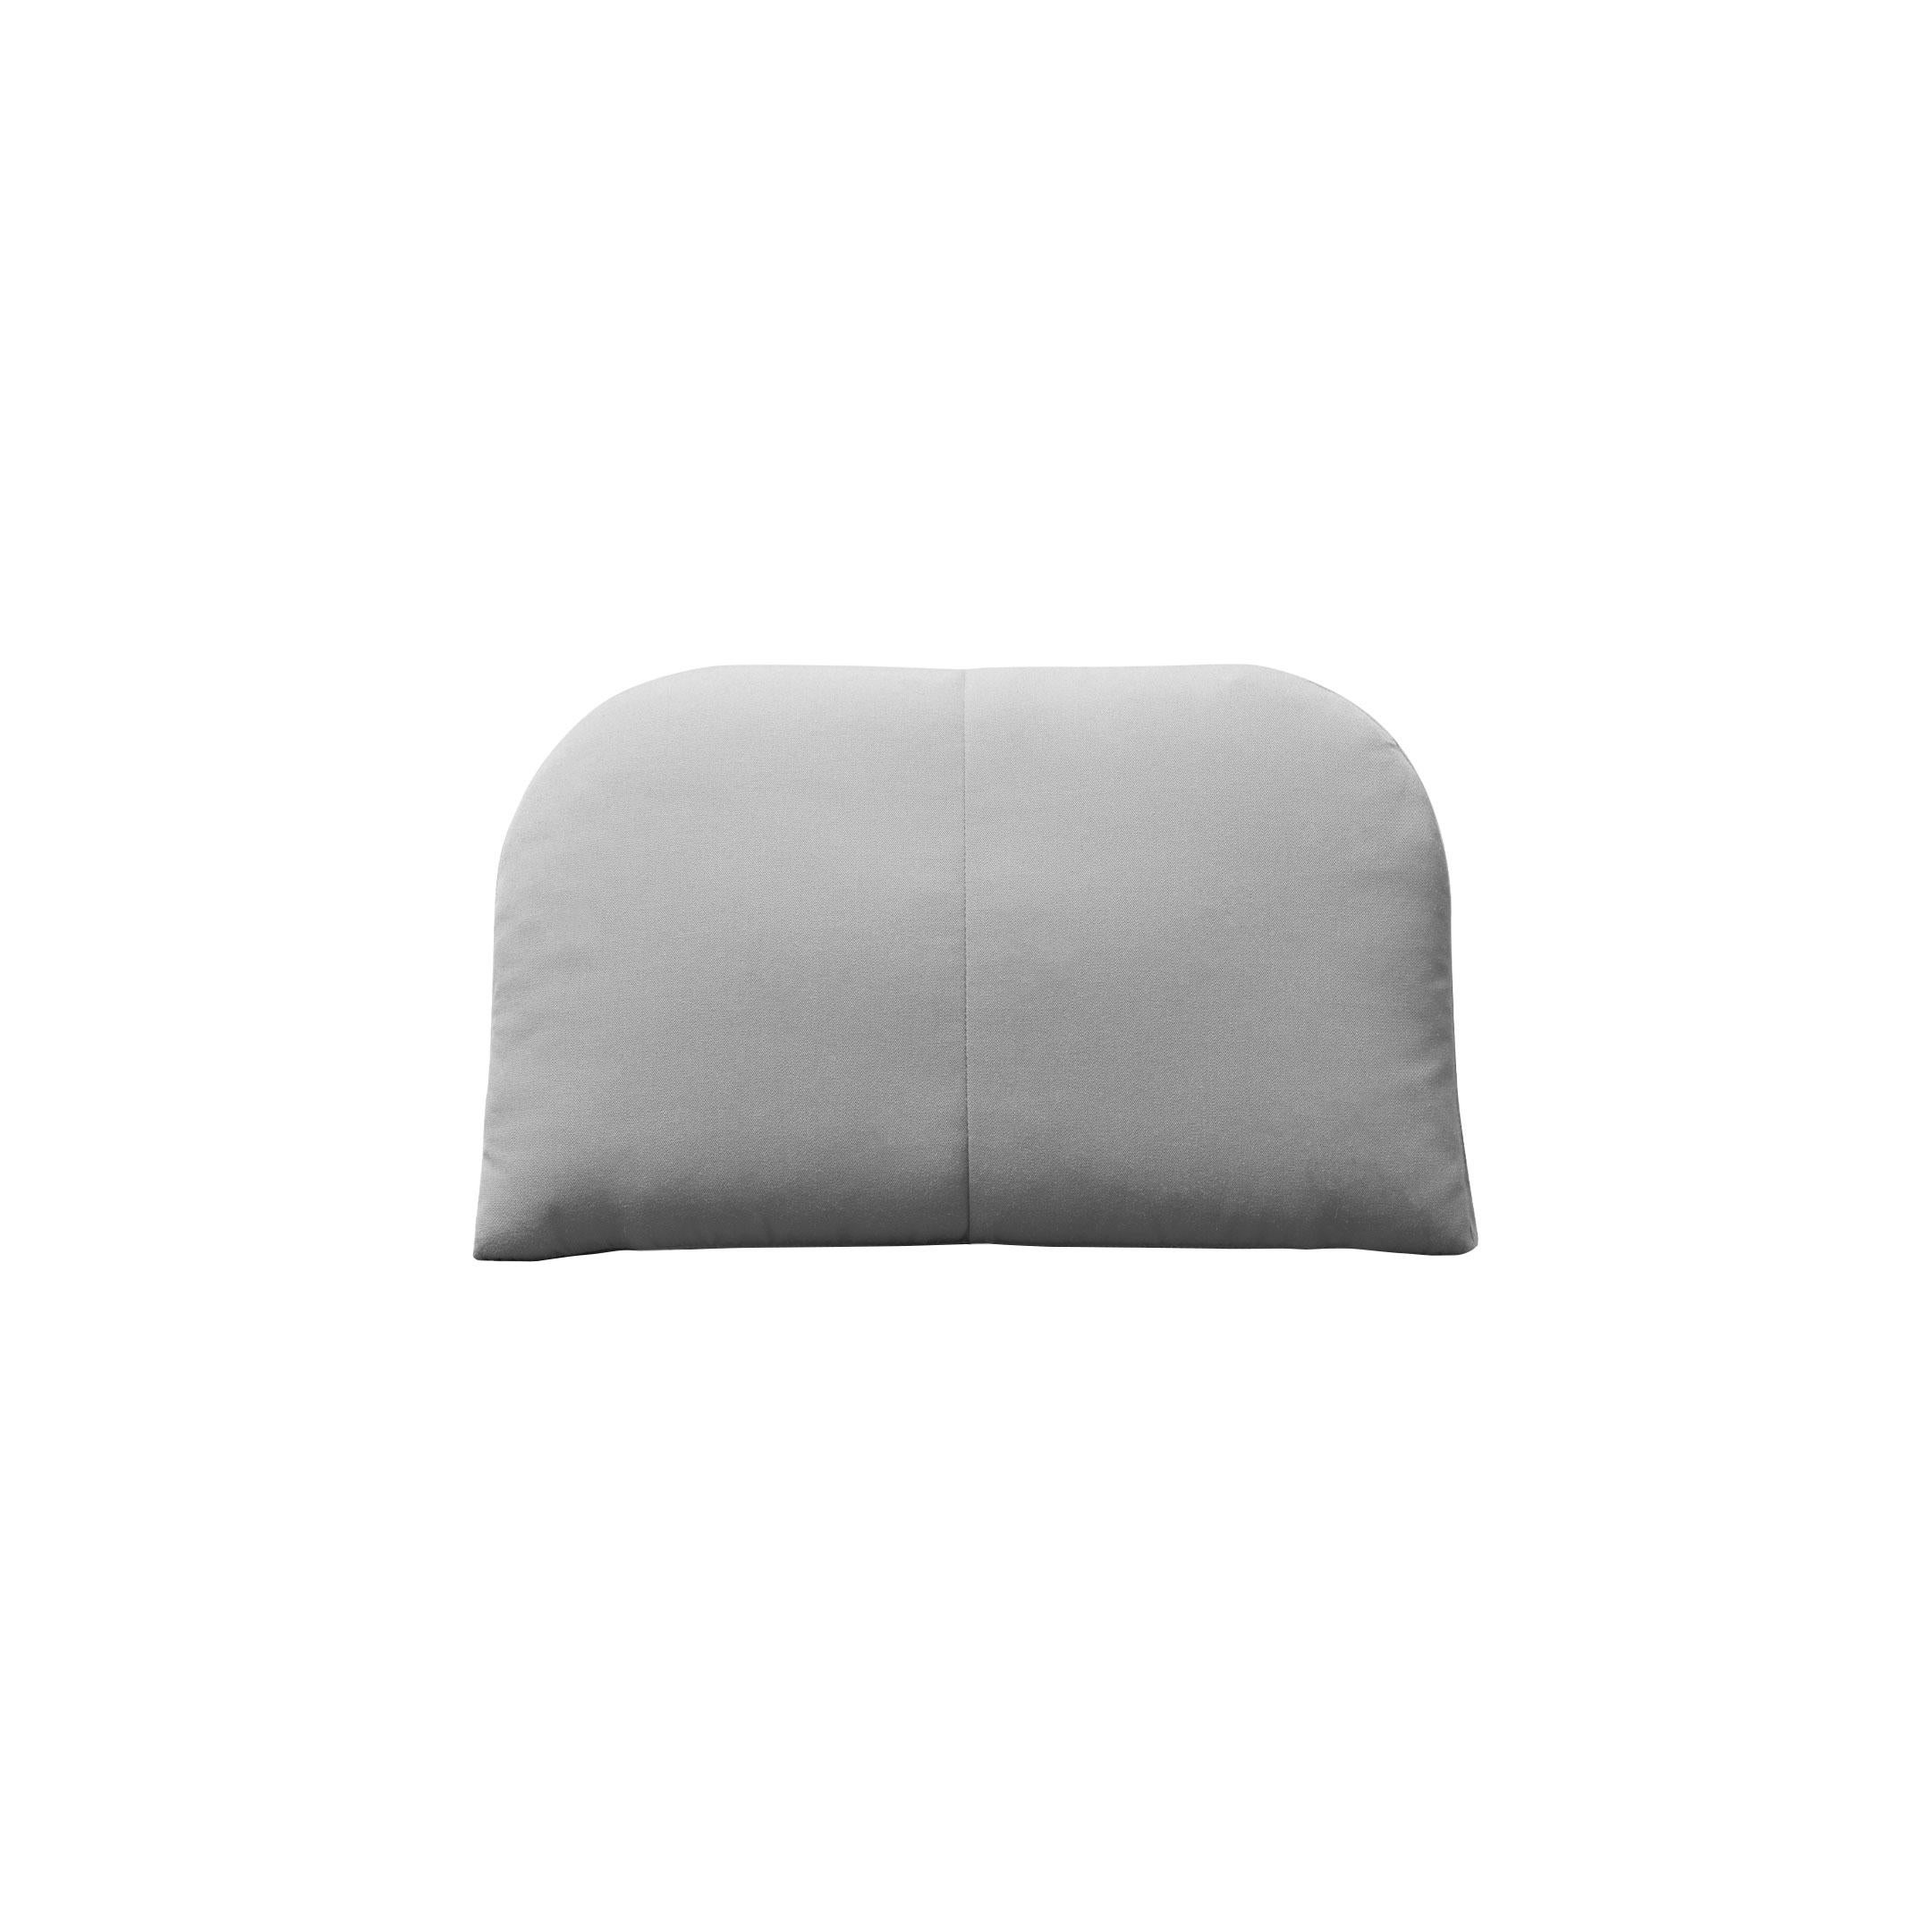 Woven Bend Goods - Arc Throw Pillow in Aruba Sunbrella For Sale